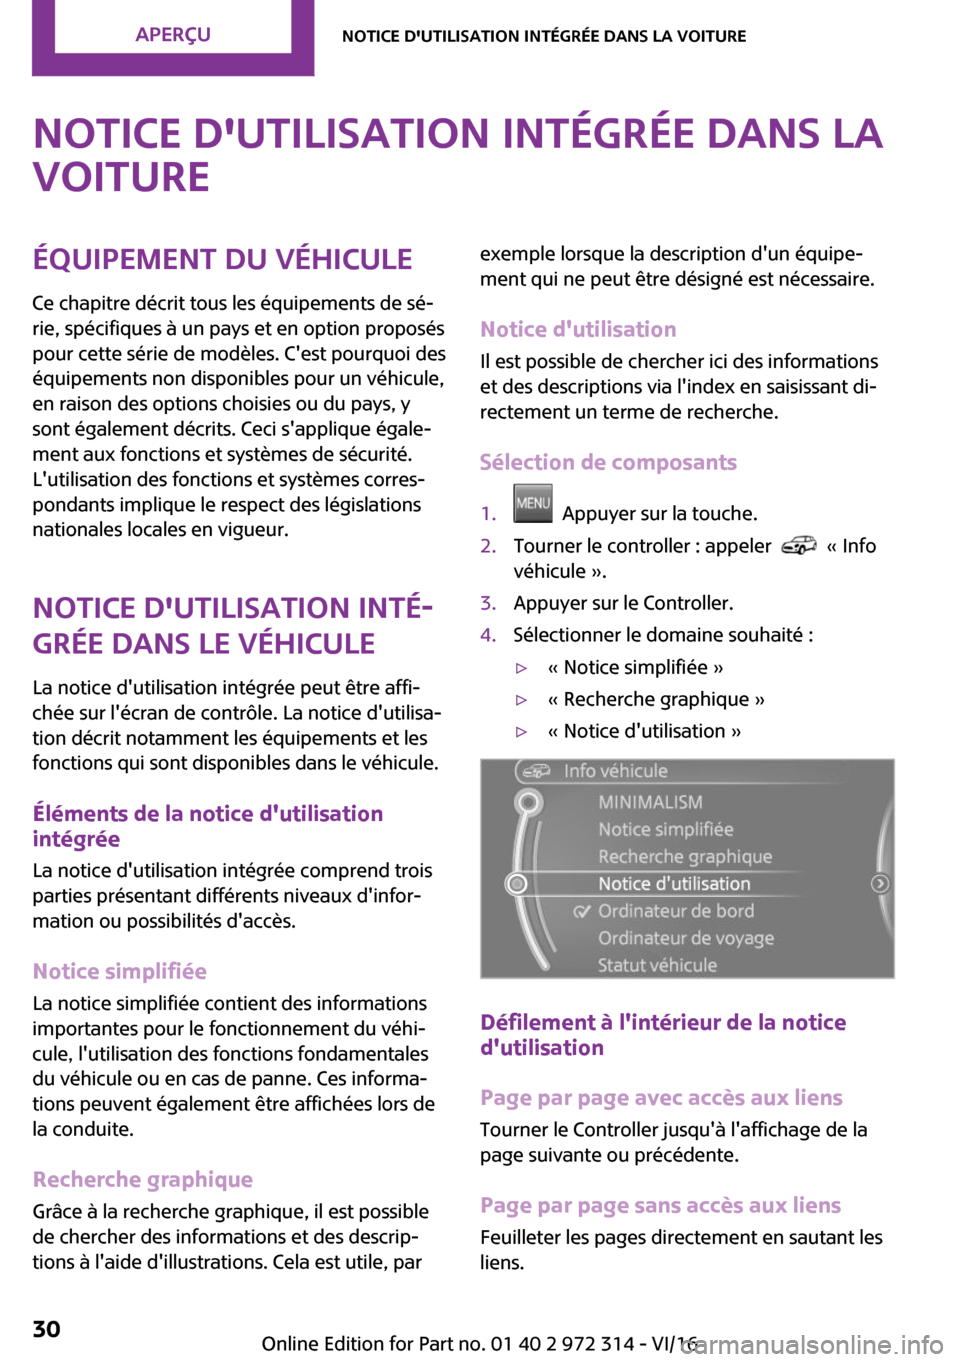 MINI 5 door 2016  Manuel du propriétaire (in French) �N�o�t�i�c�e��d��u�t�i�l�i�s�a�t�i�o�n��i�n�t�é�g�r�é�e��d�a�n�s��l�a
�v�o�i�t�u�r�e�